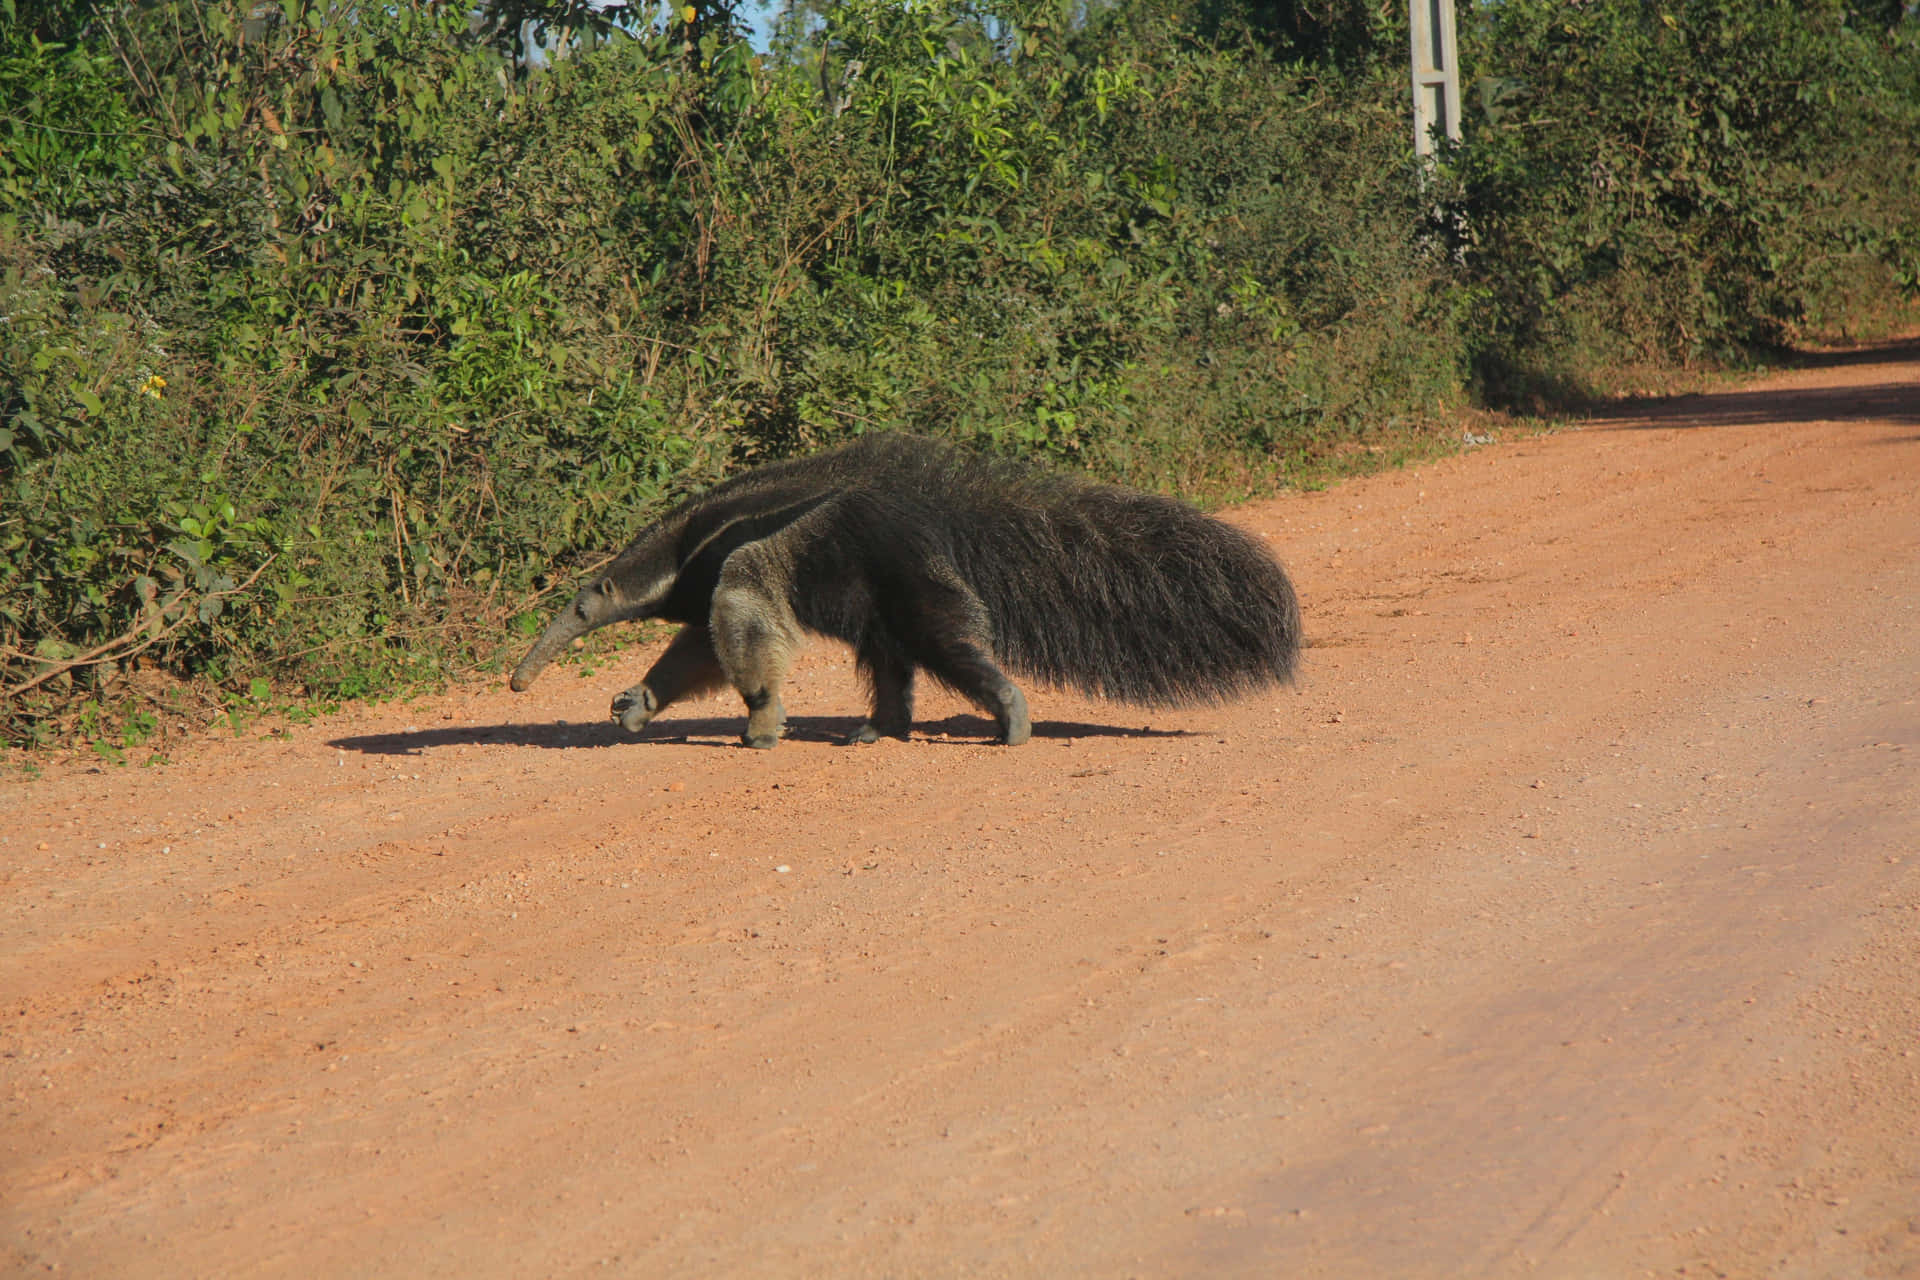 Giant Anteater Crossing Dirt Road Wallpaper